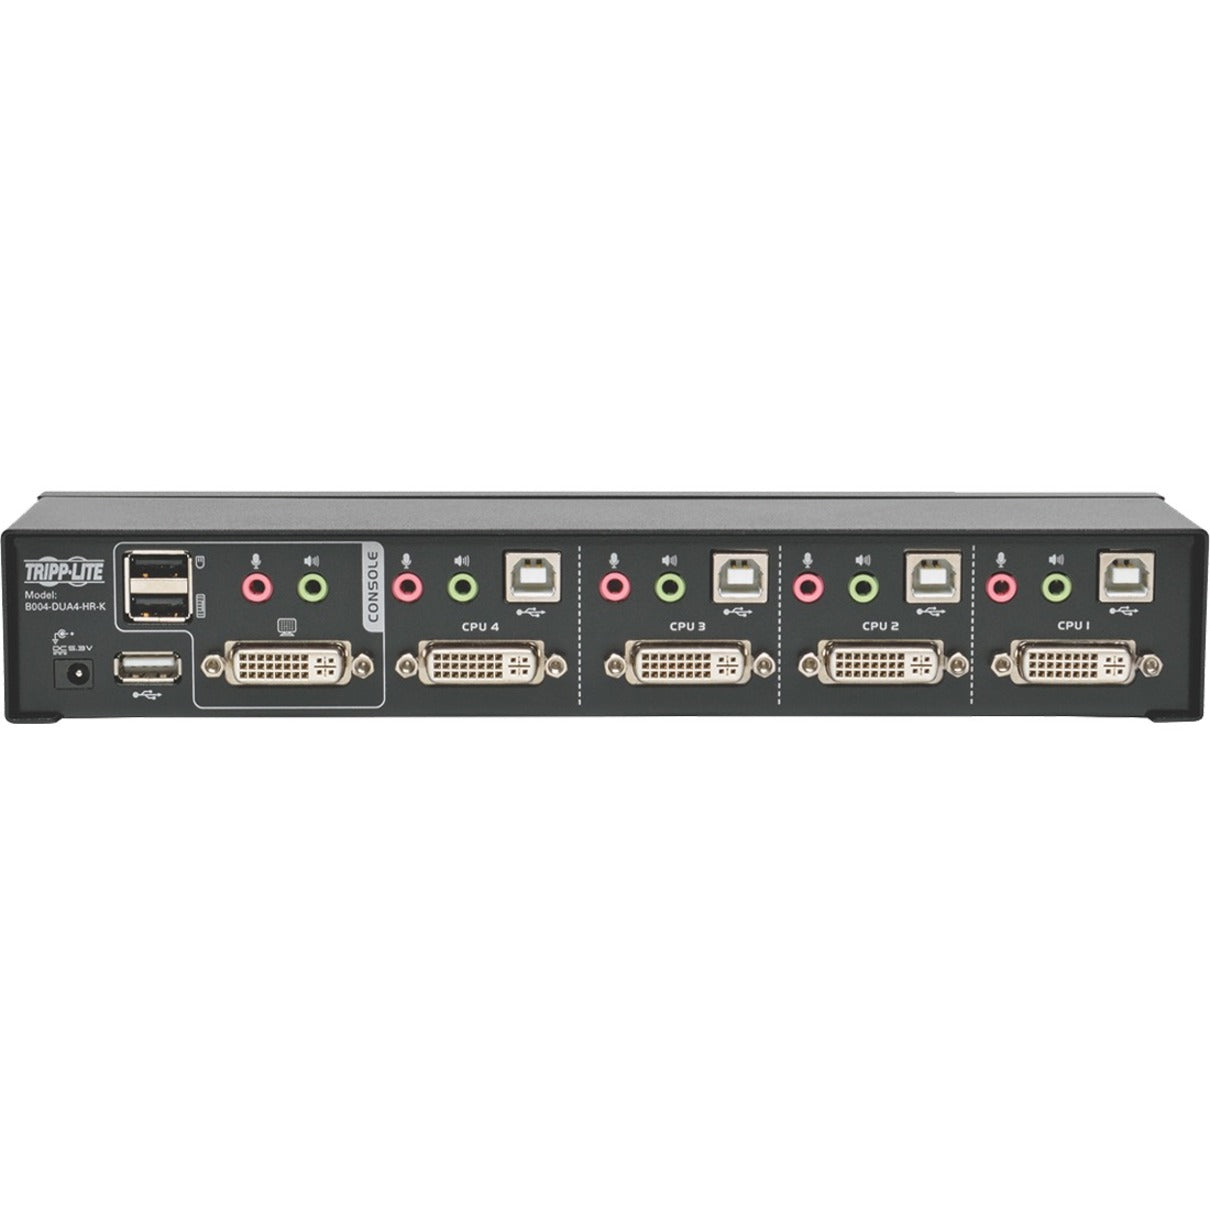 Tripp Lite B004-DUA4-HR-K 4-Port DVI Dual-Link / USB KVM Switch with Audio and Cables, WQUXGA, 2560 x 1600, TAA Compliant